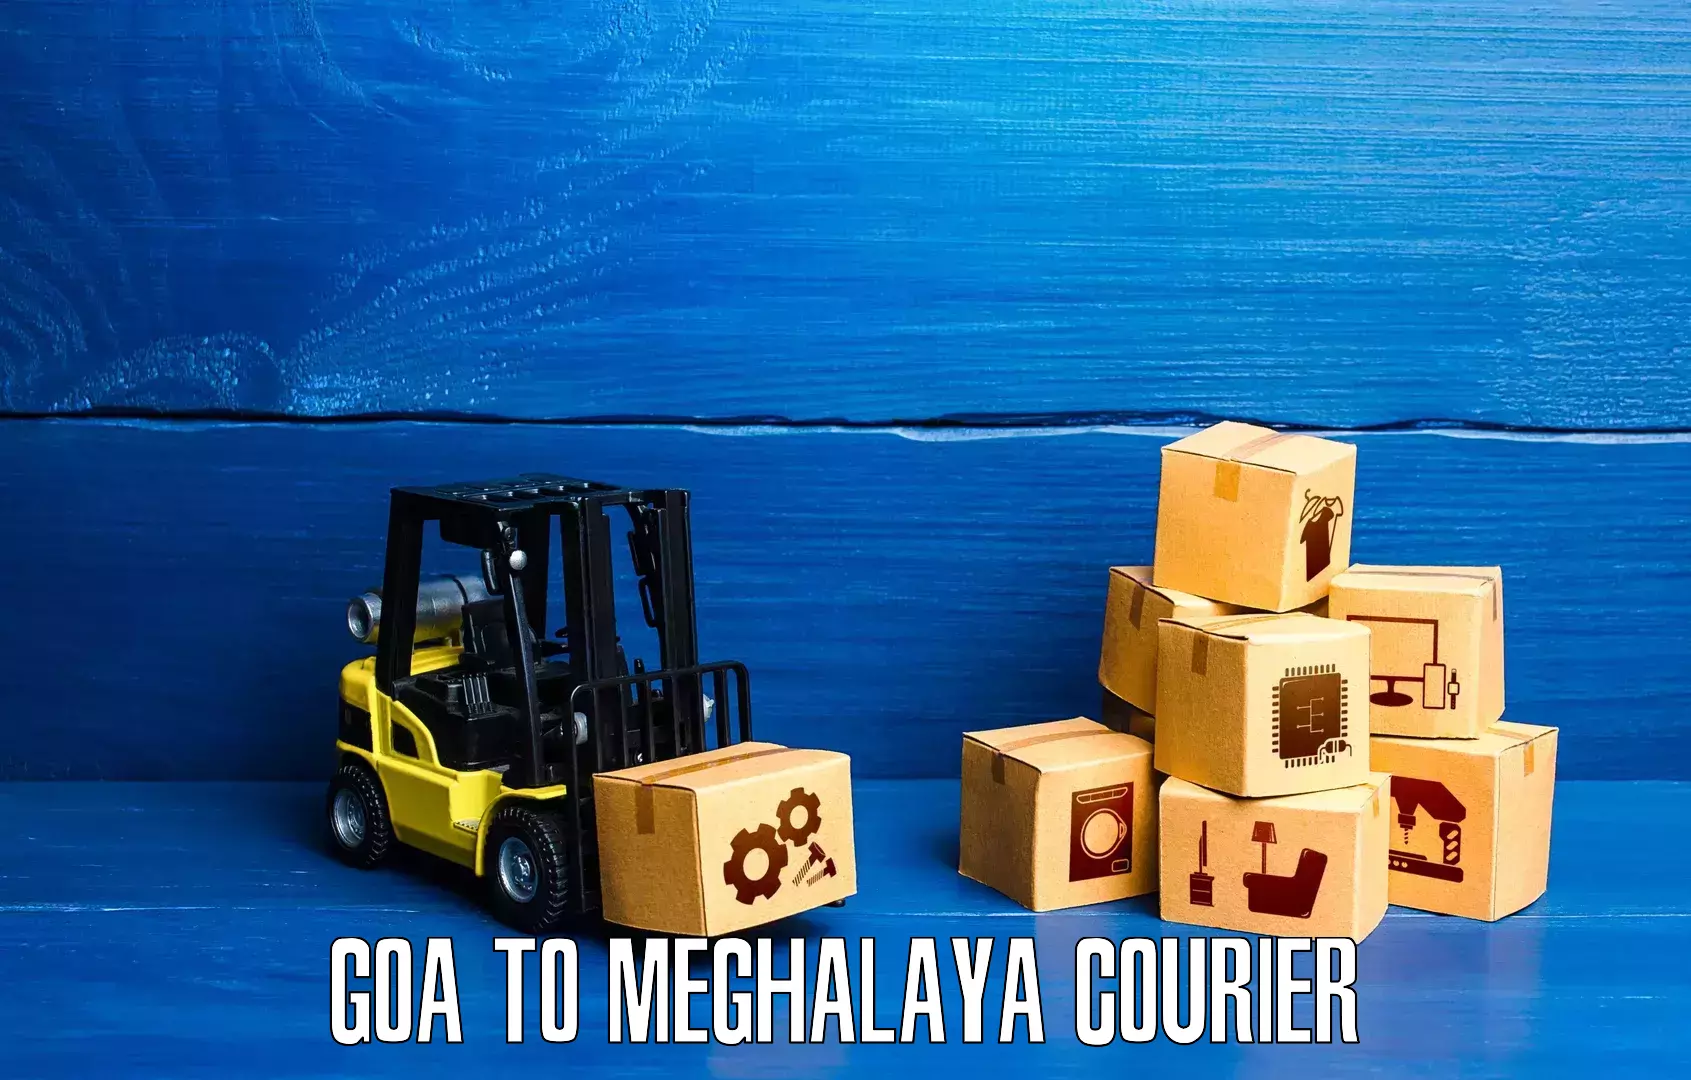 Courier service comparison Goa to Shillong